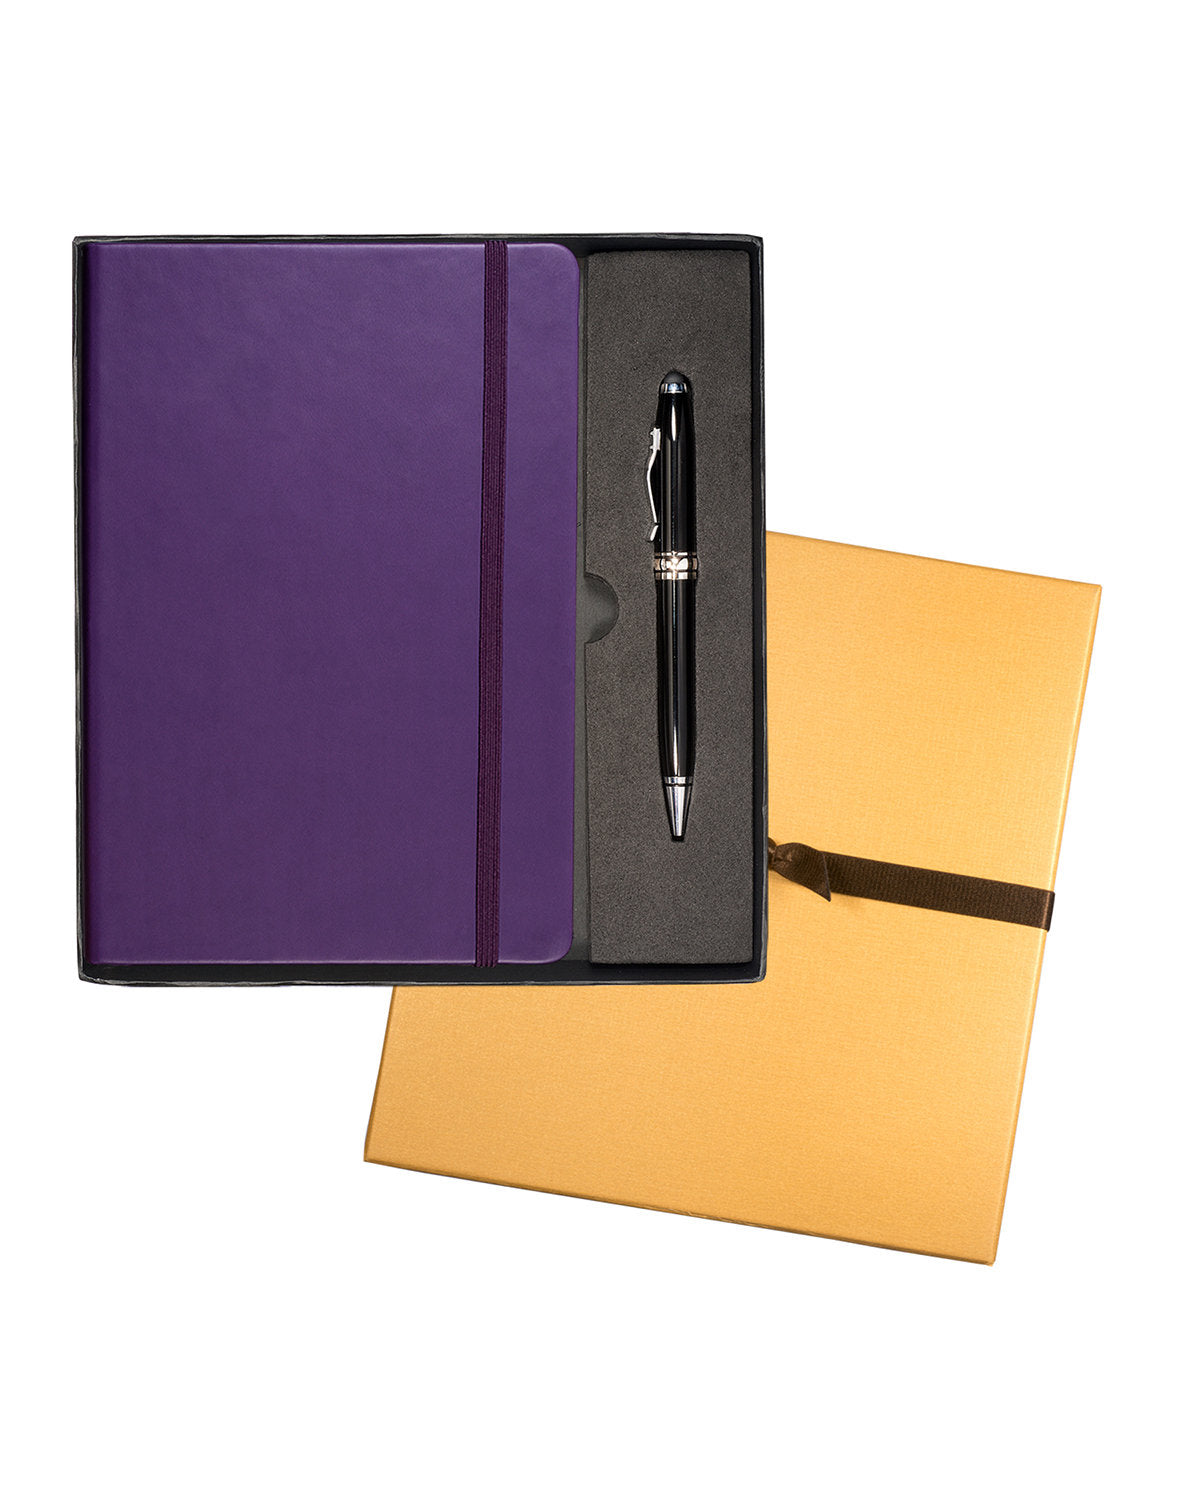 # Journal And Executive Stylus Pen Set